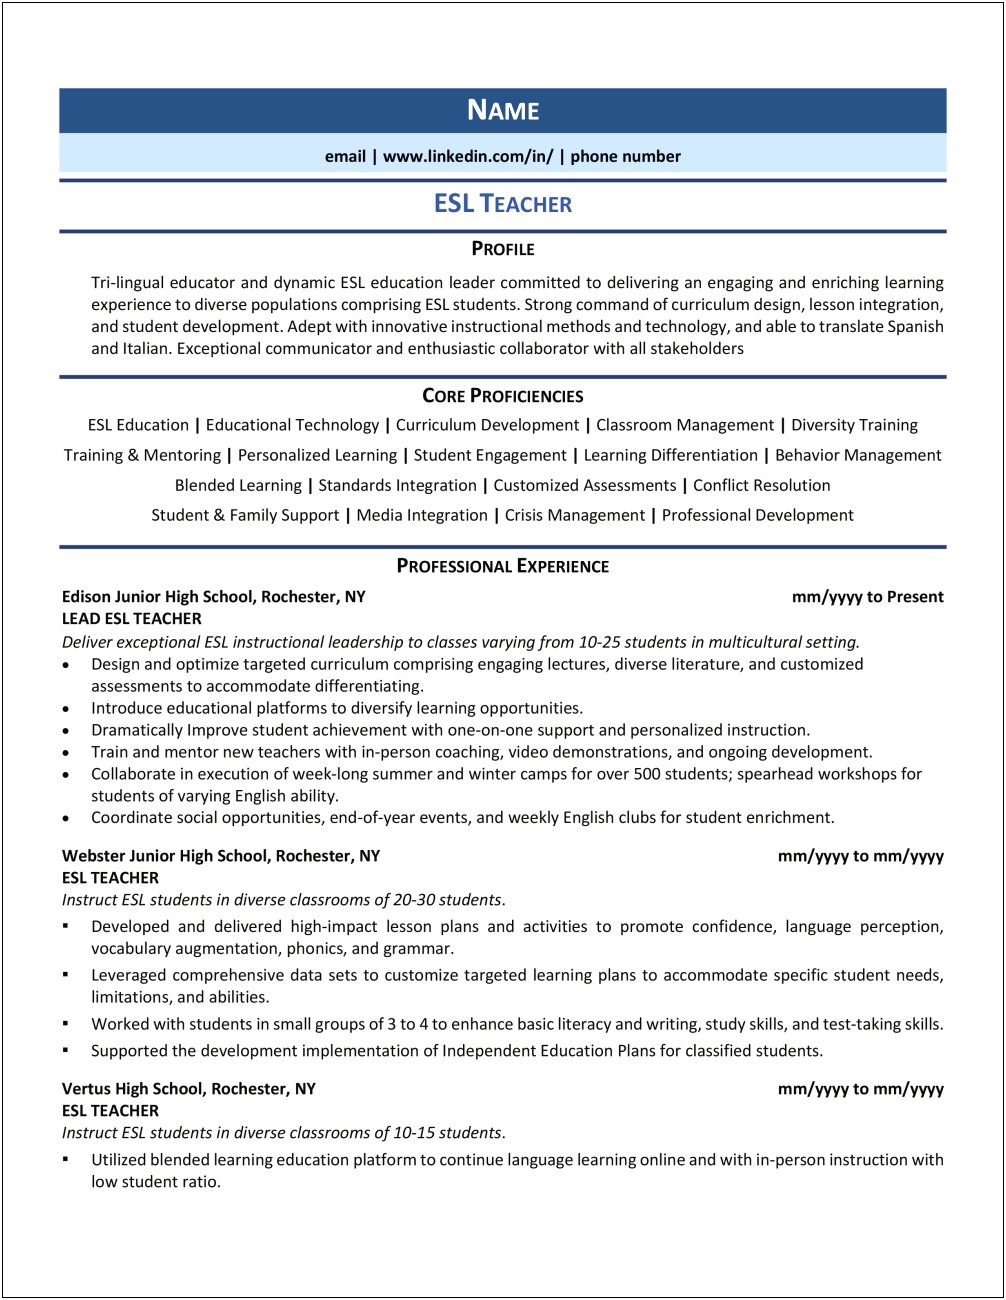 Resume Objective For Esl Tutor